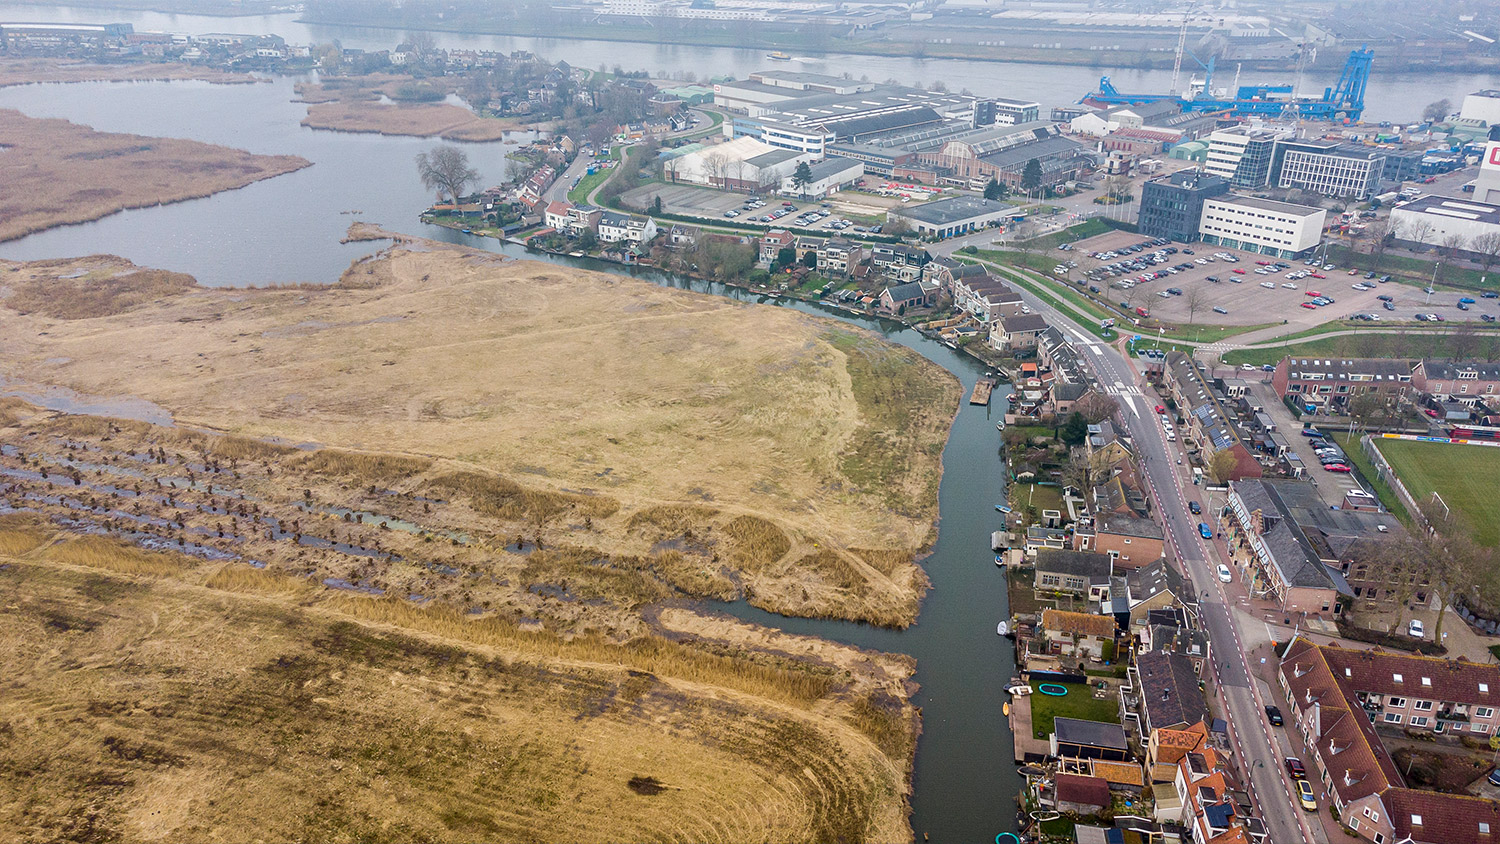 Sanering project Kinderdijk